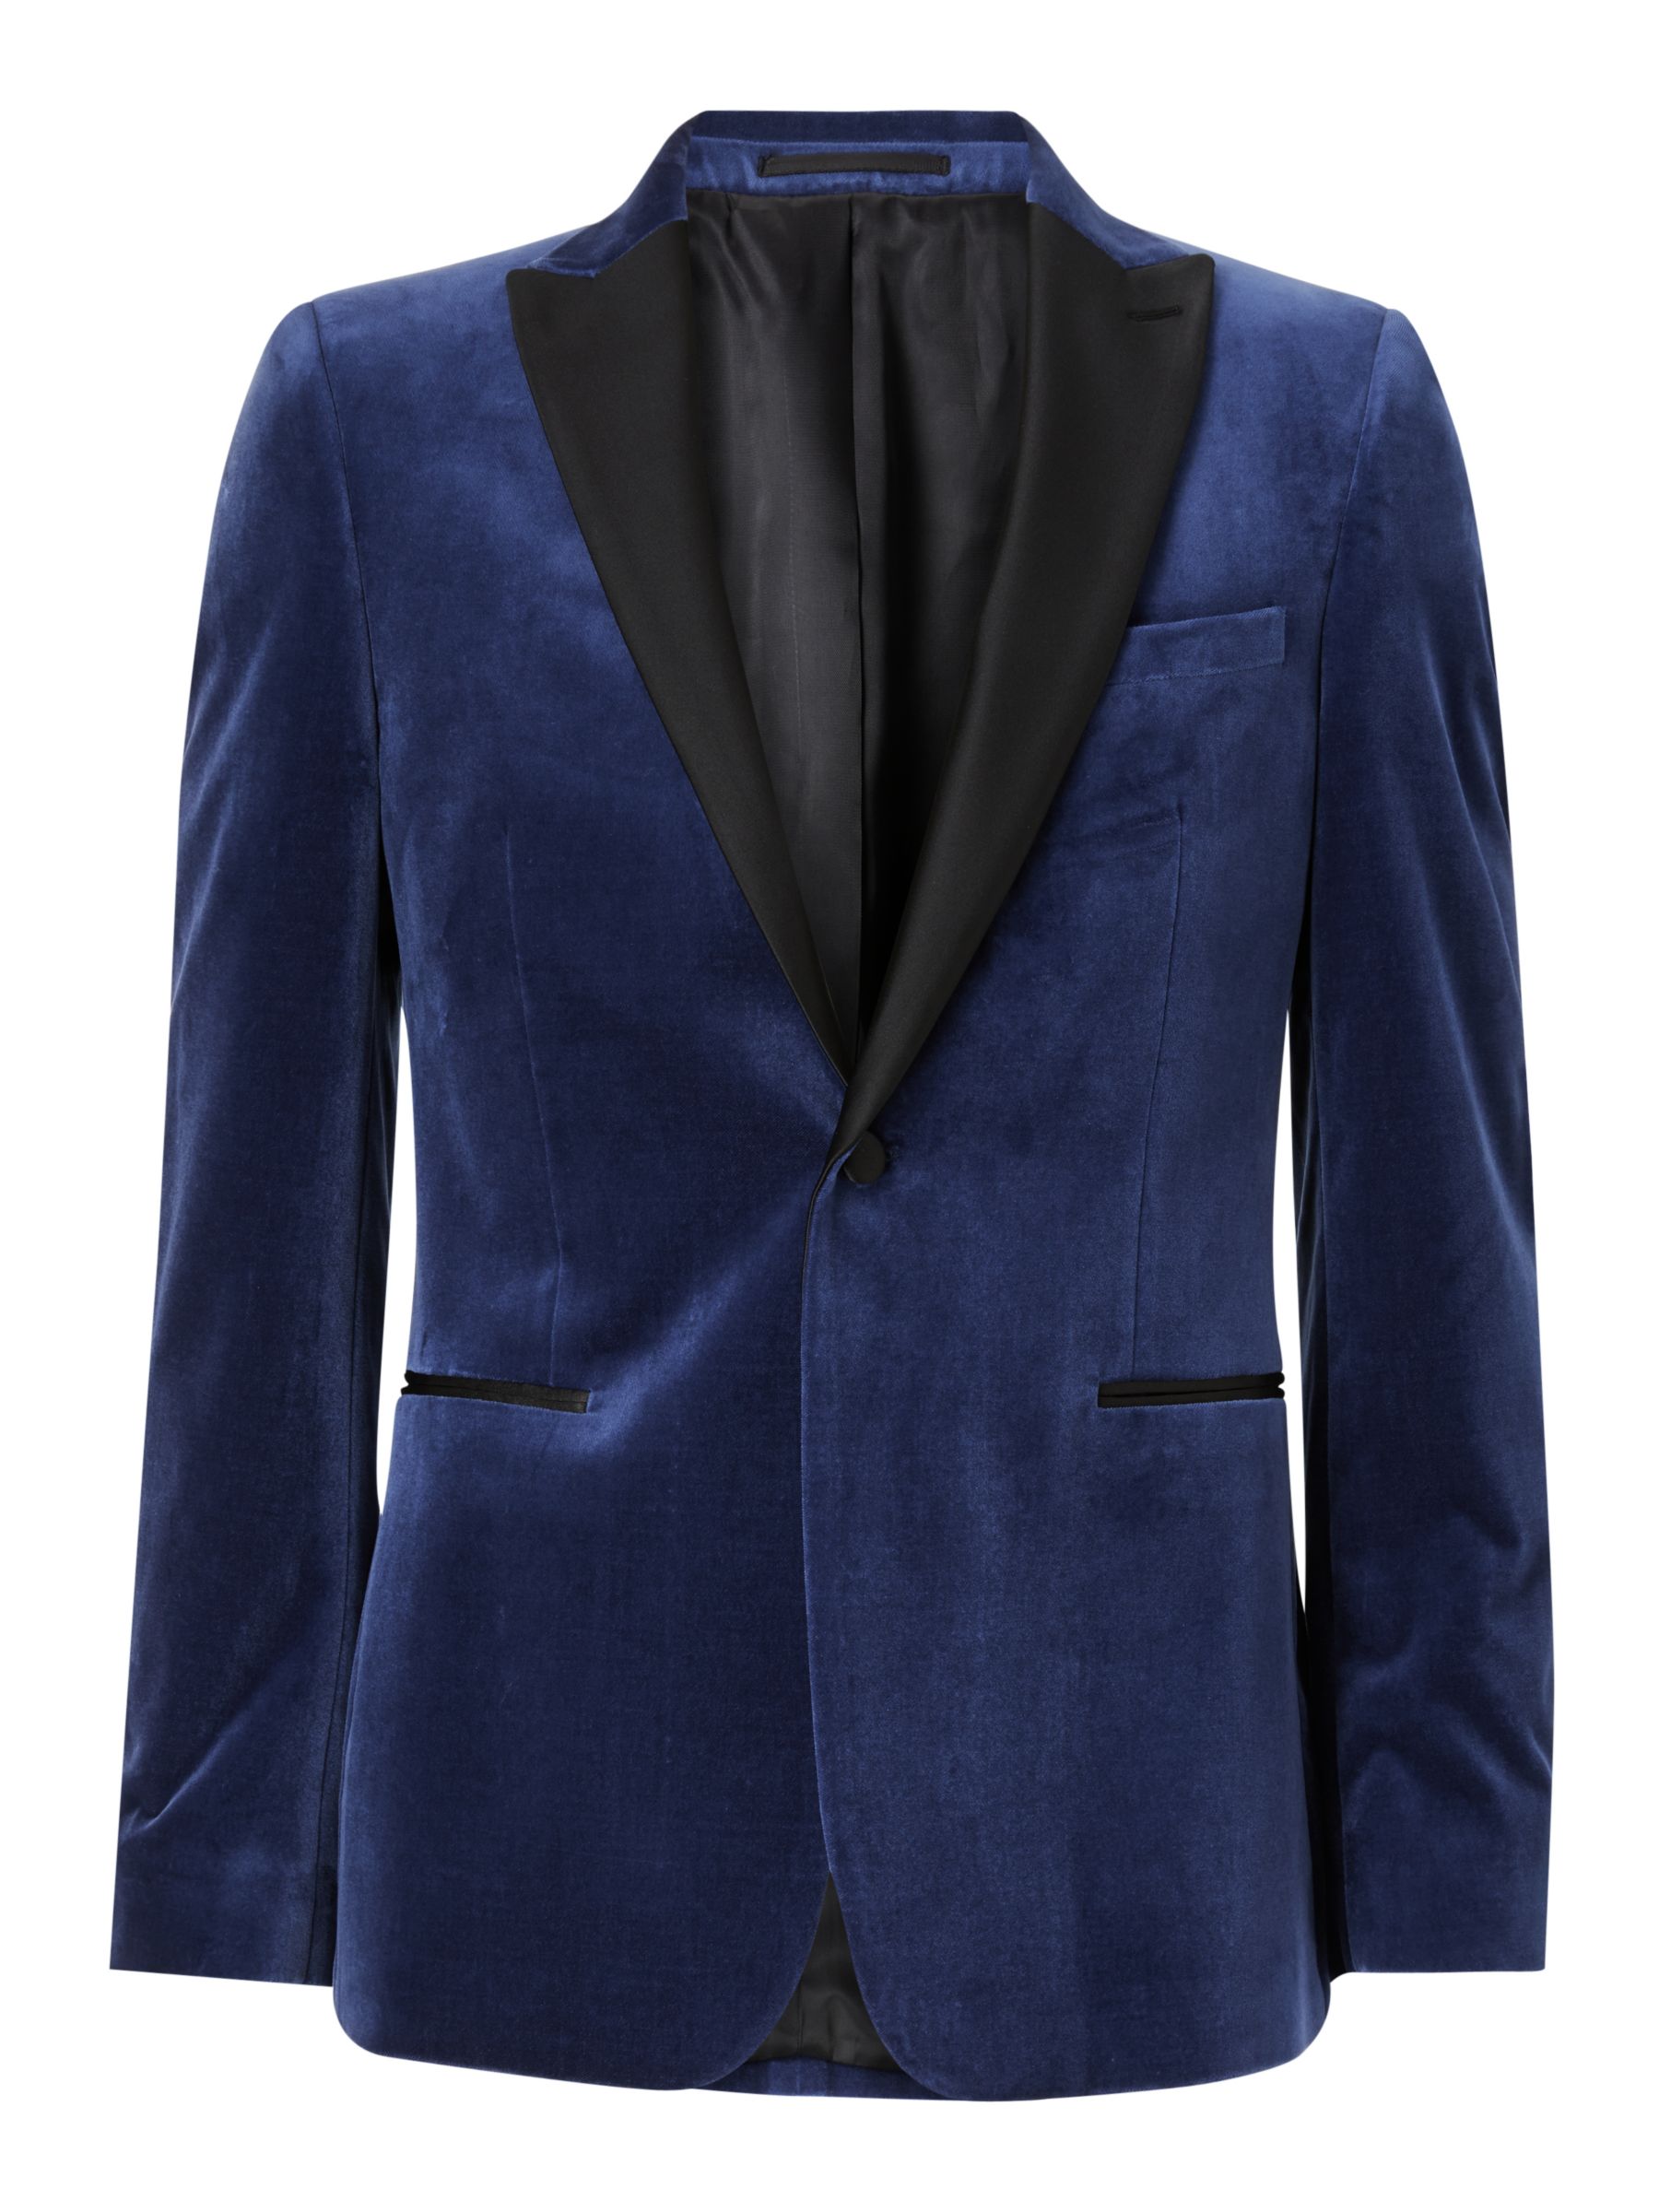 John Lewis & Partners Italian Velvet Peak Lapel Slim Fit Dress Suit ...